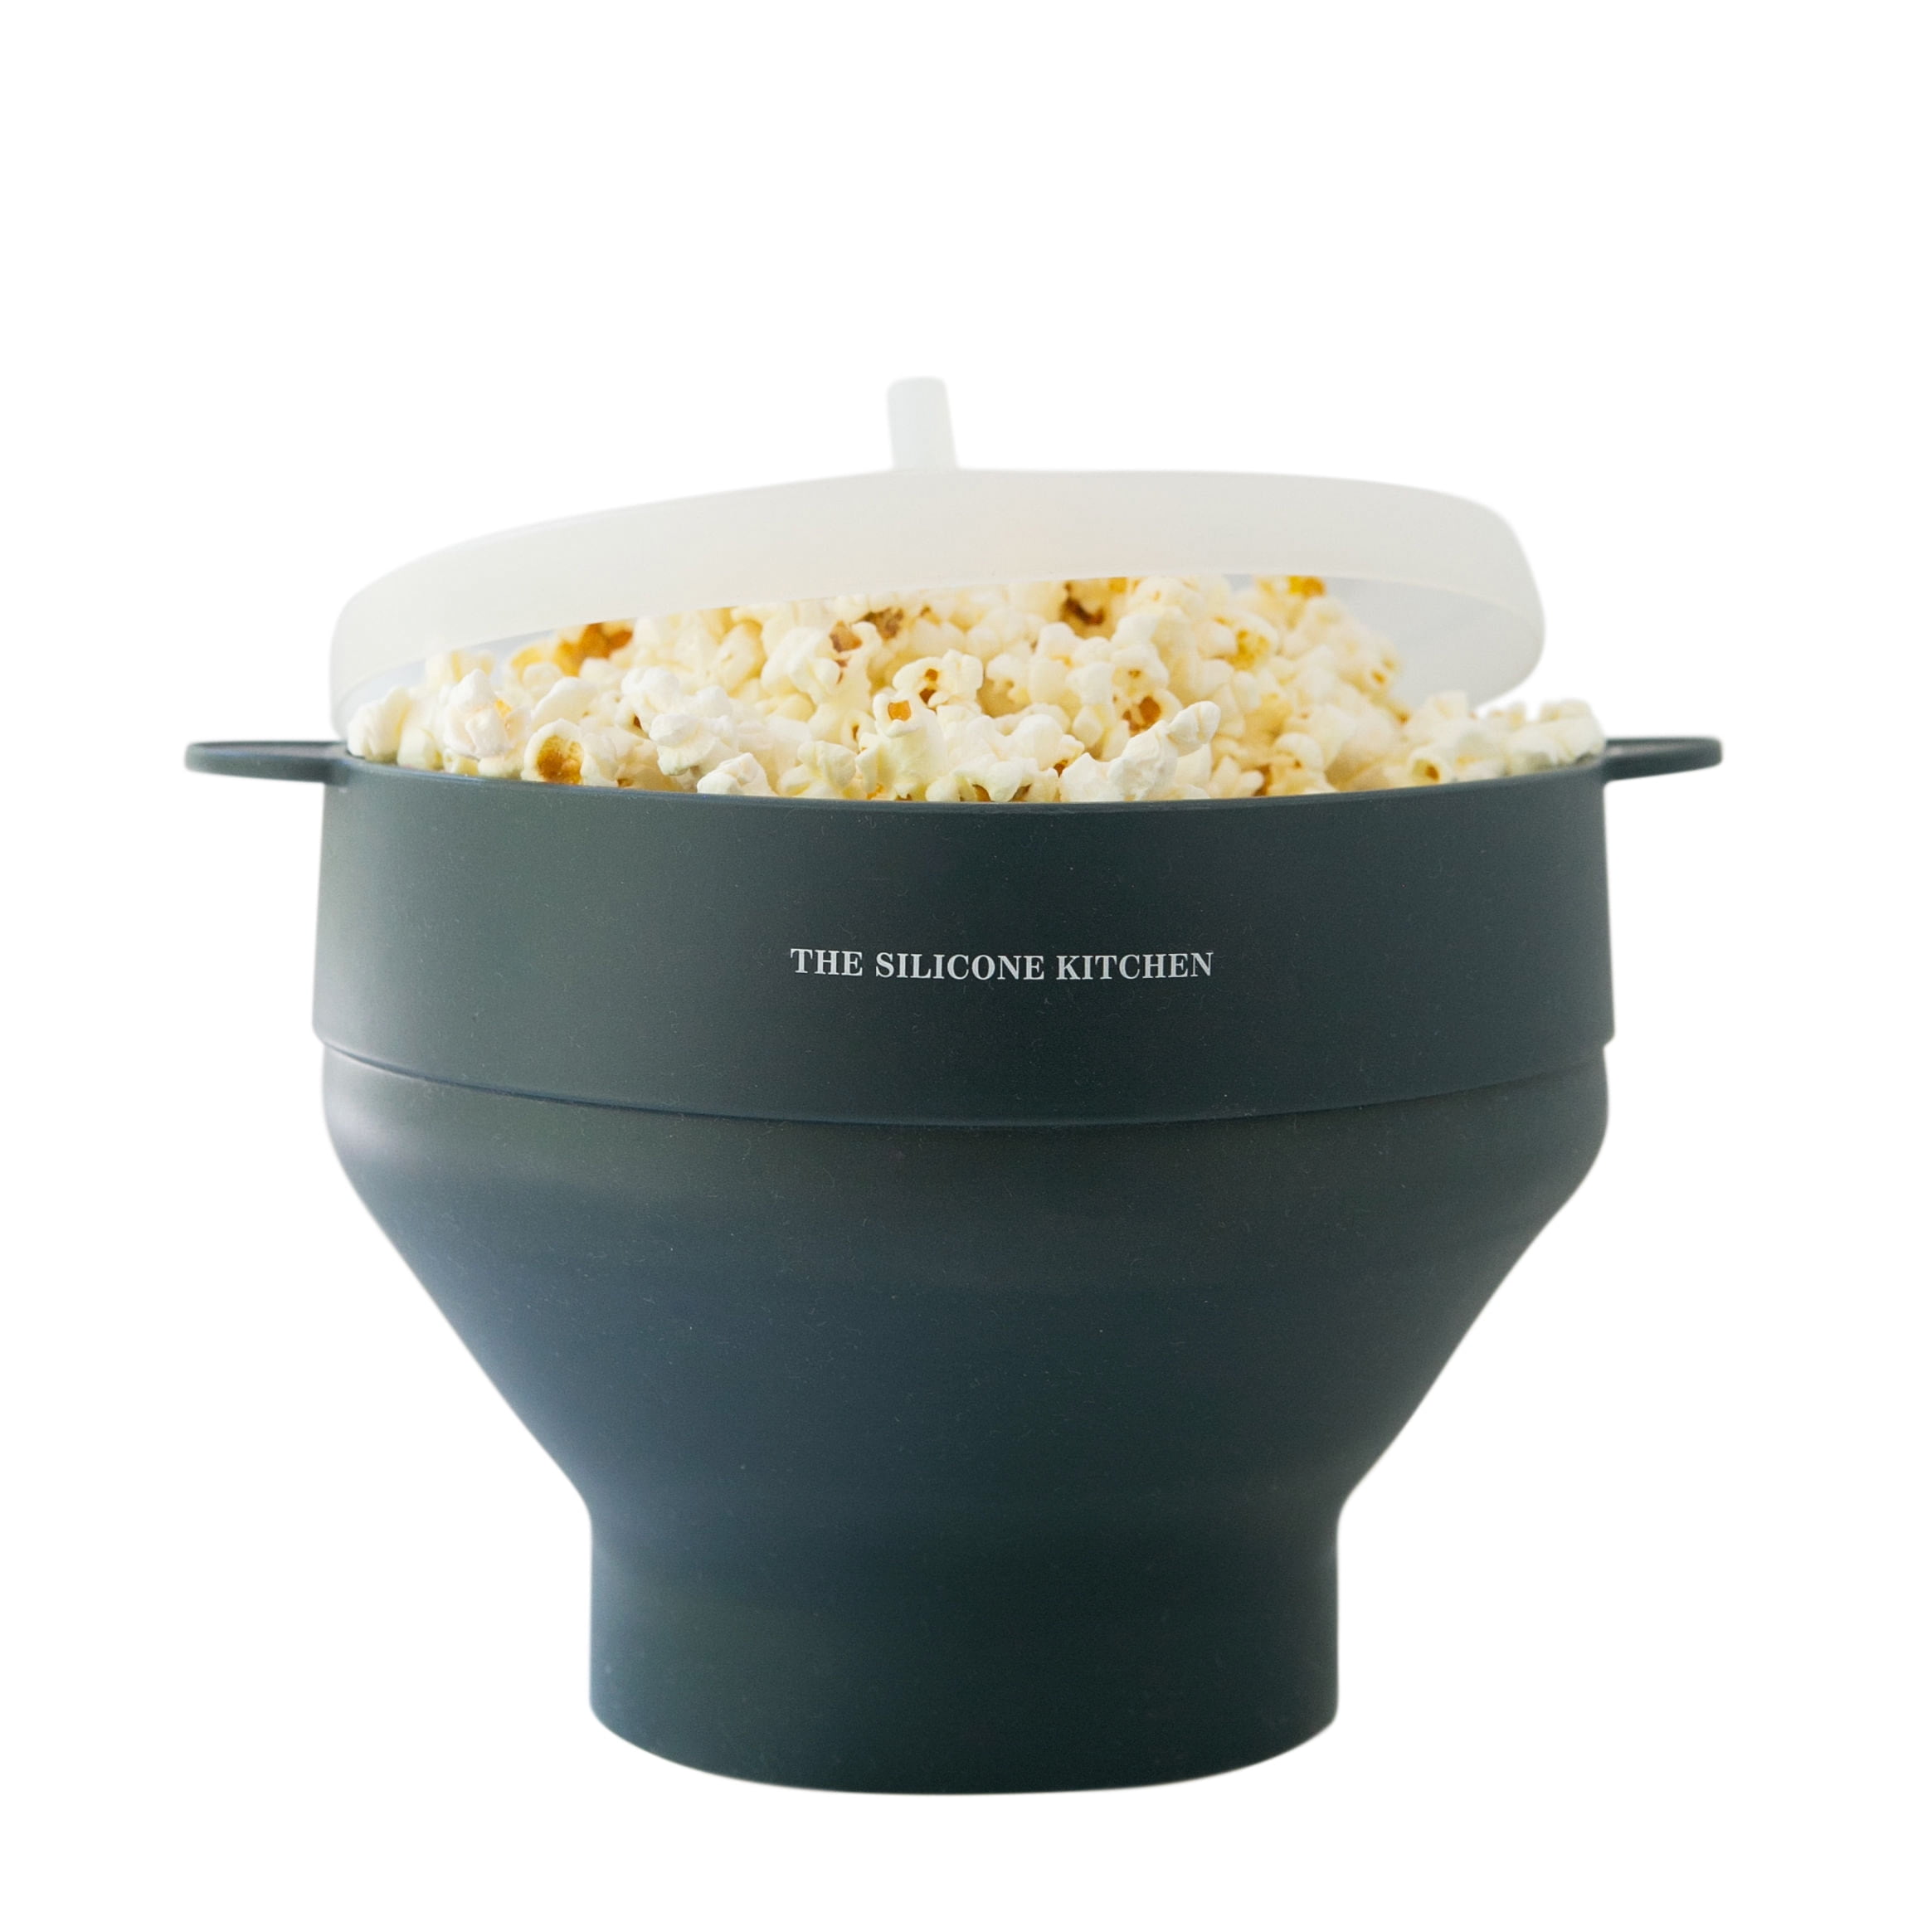 Silicone Popcorn Maker Yellow Collapsible Bowl BPA Free & Dishwasher Safe - The Original Proper Popper Microwave Popcorn Popper